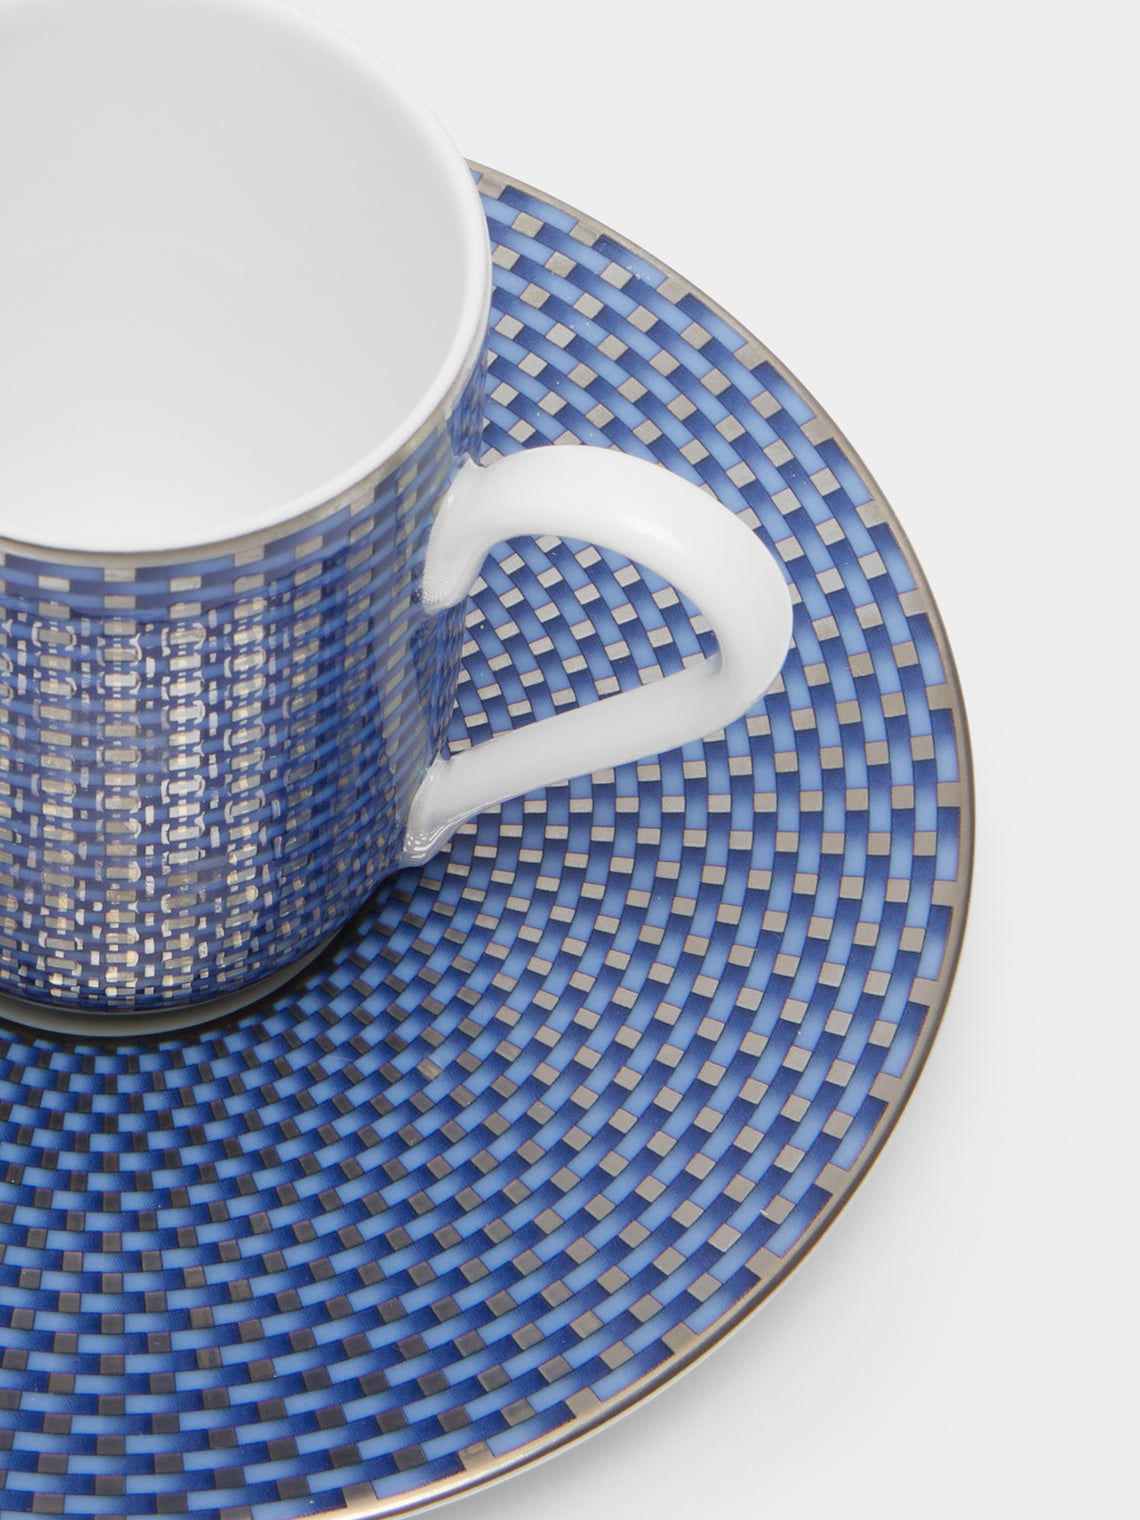 Raynaud - Trésor Bleu Porcelain Espresso Cup and Saucer -  - ABASK